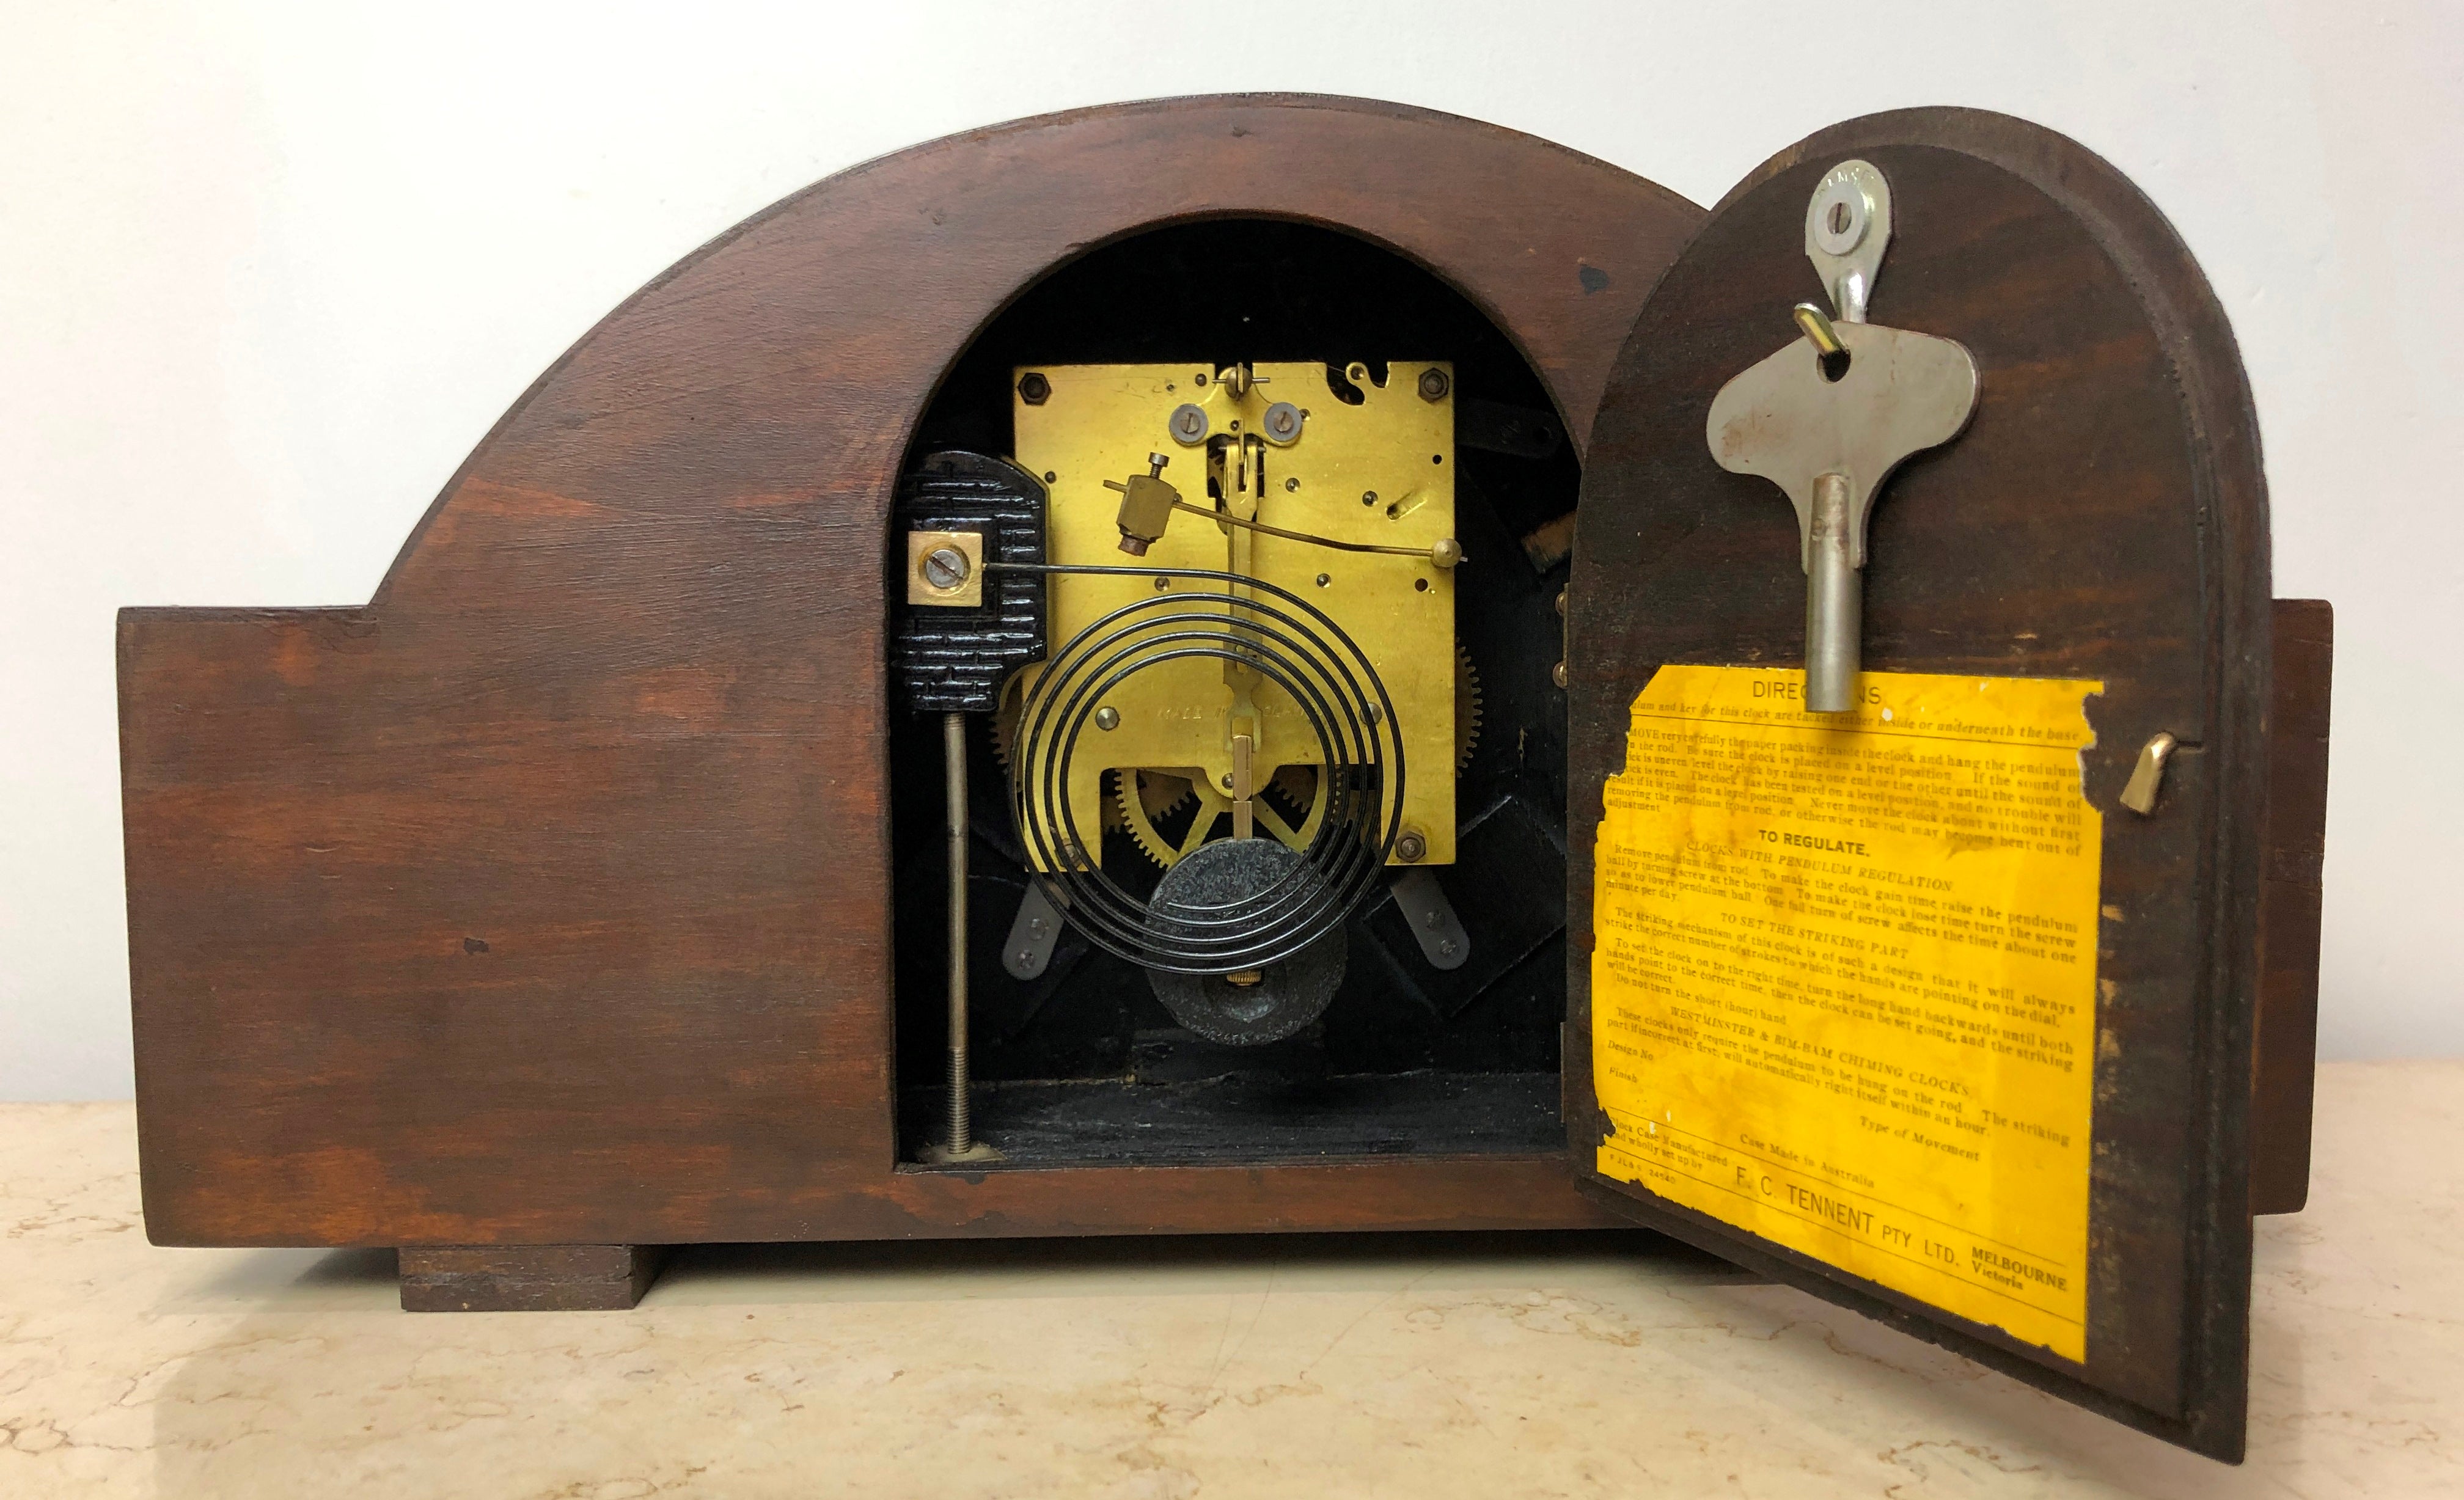 Original Vintage Enfield Mantel Clock | eXibit collection